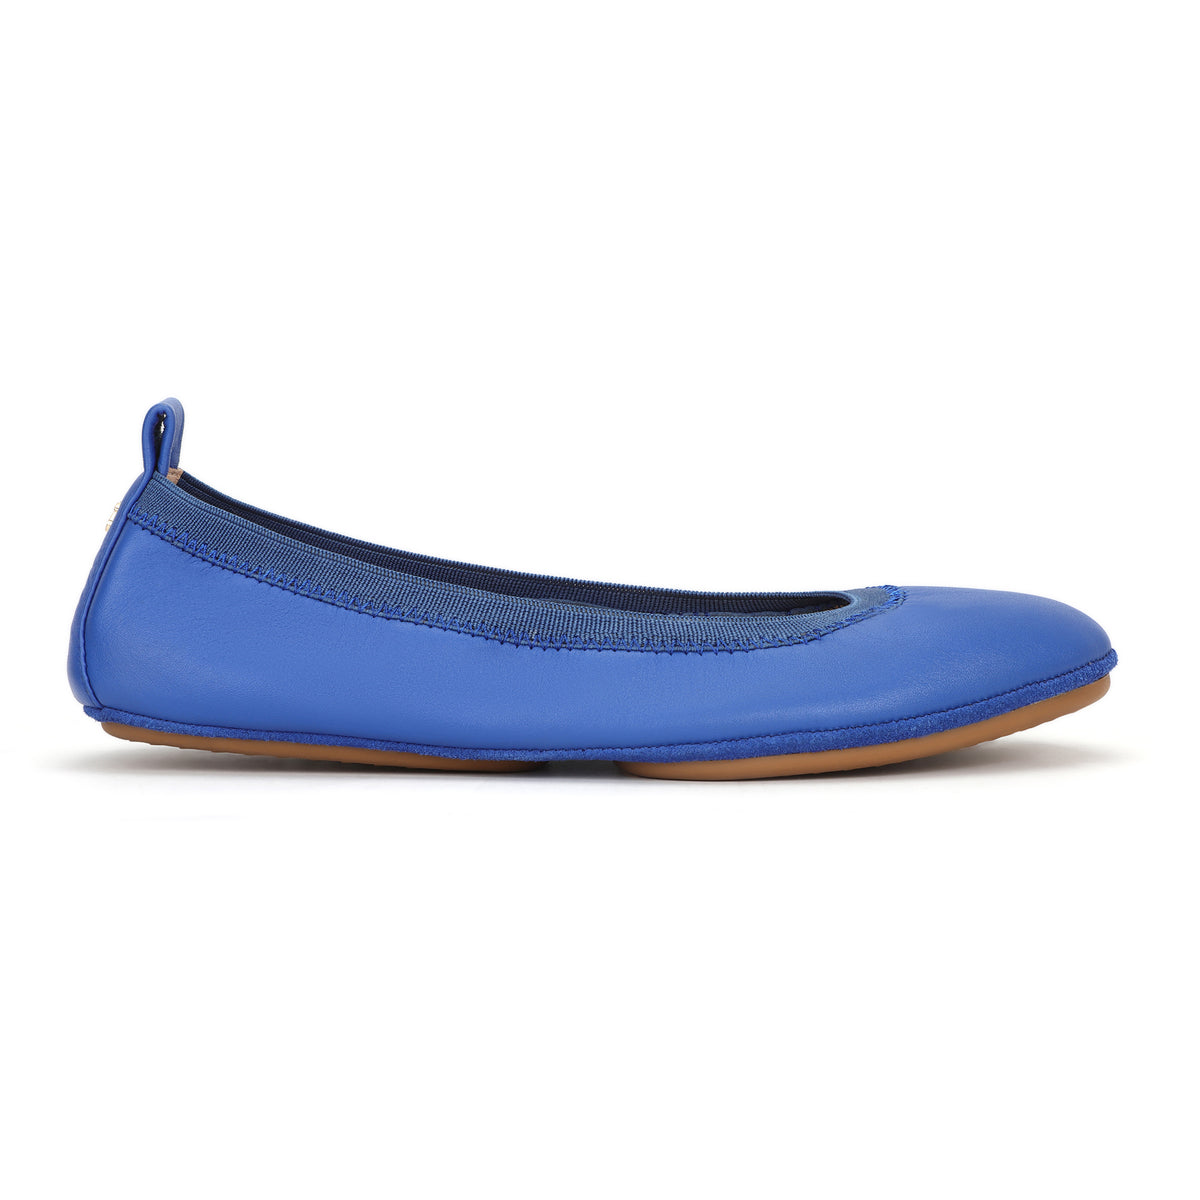 Samara Foldable Ballet Flat in Lapis Blue Leather